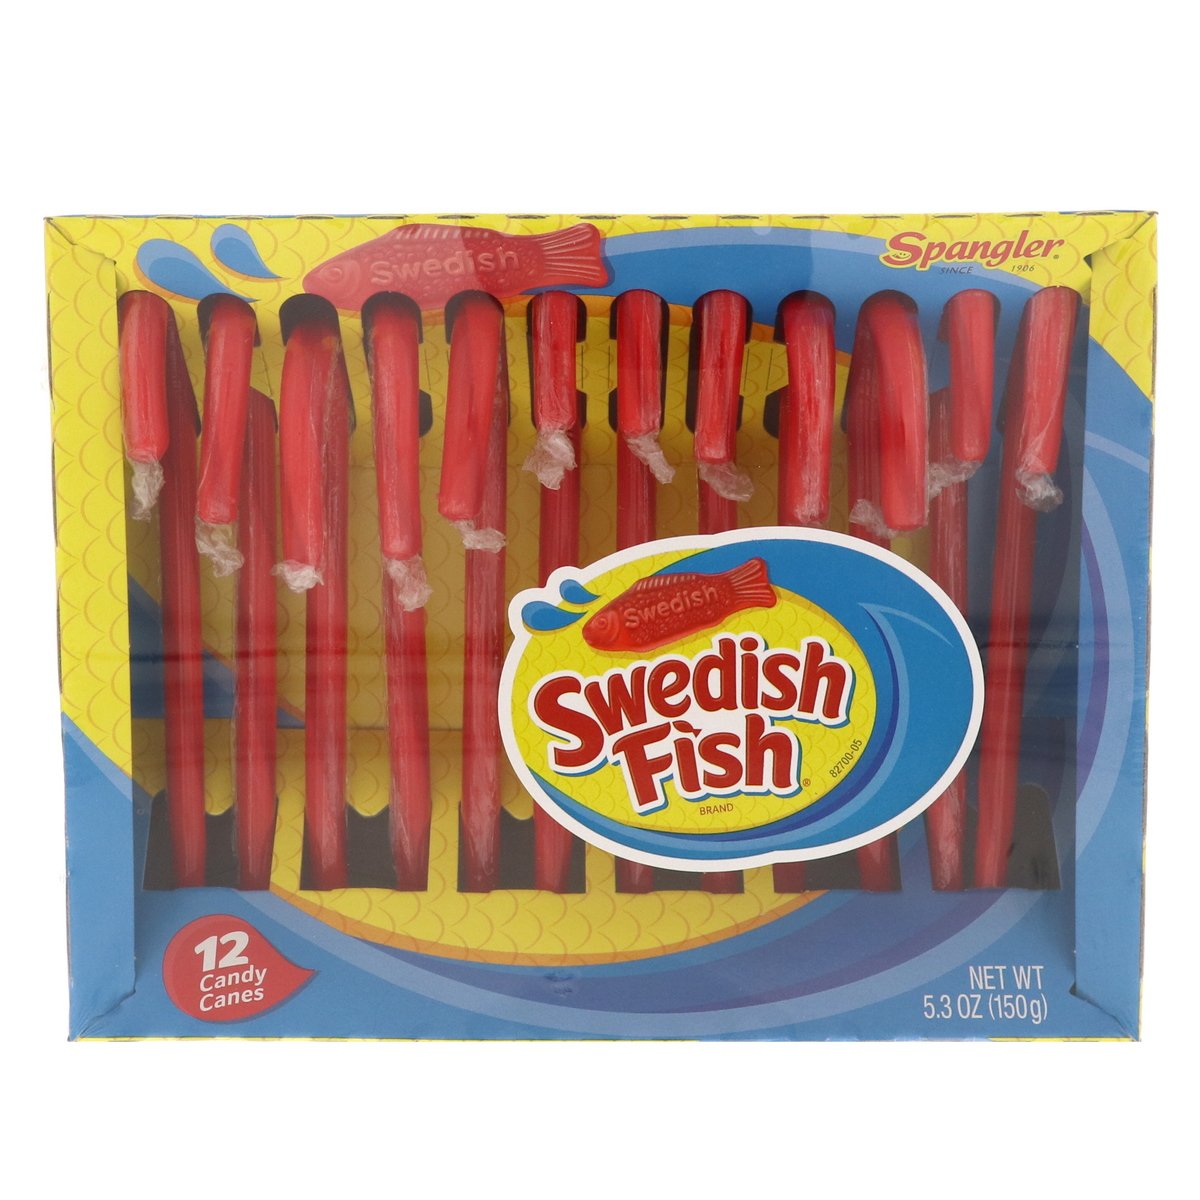 Spangler Swedish Fish Candy Canes 150 g